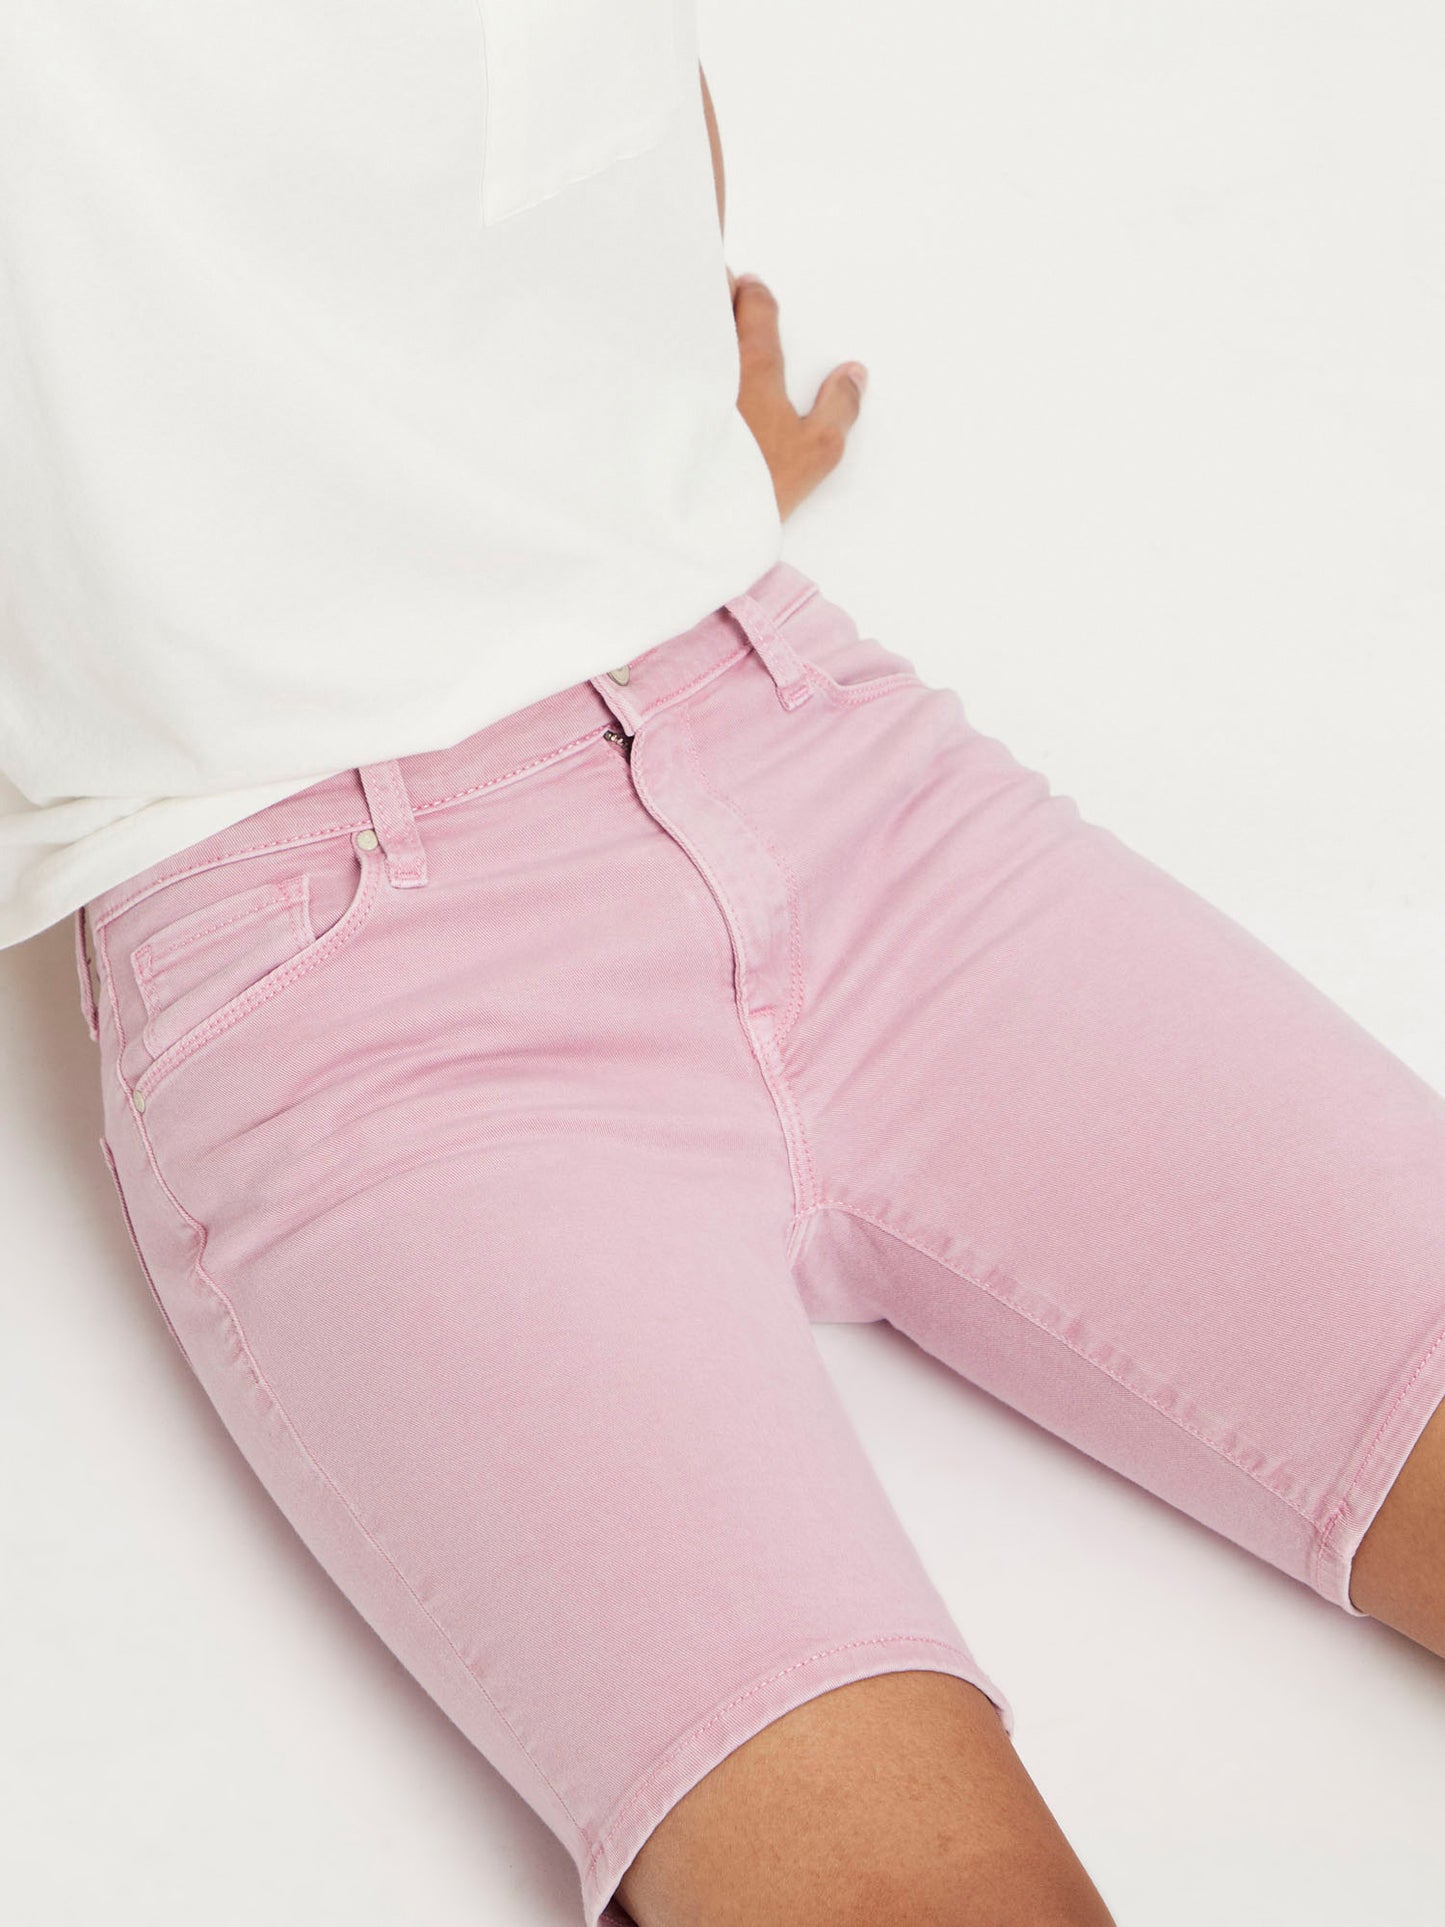 Women's Jeans Shorts Anya Slim Fit High Waist light pink